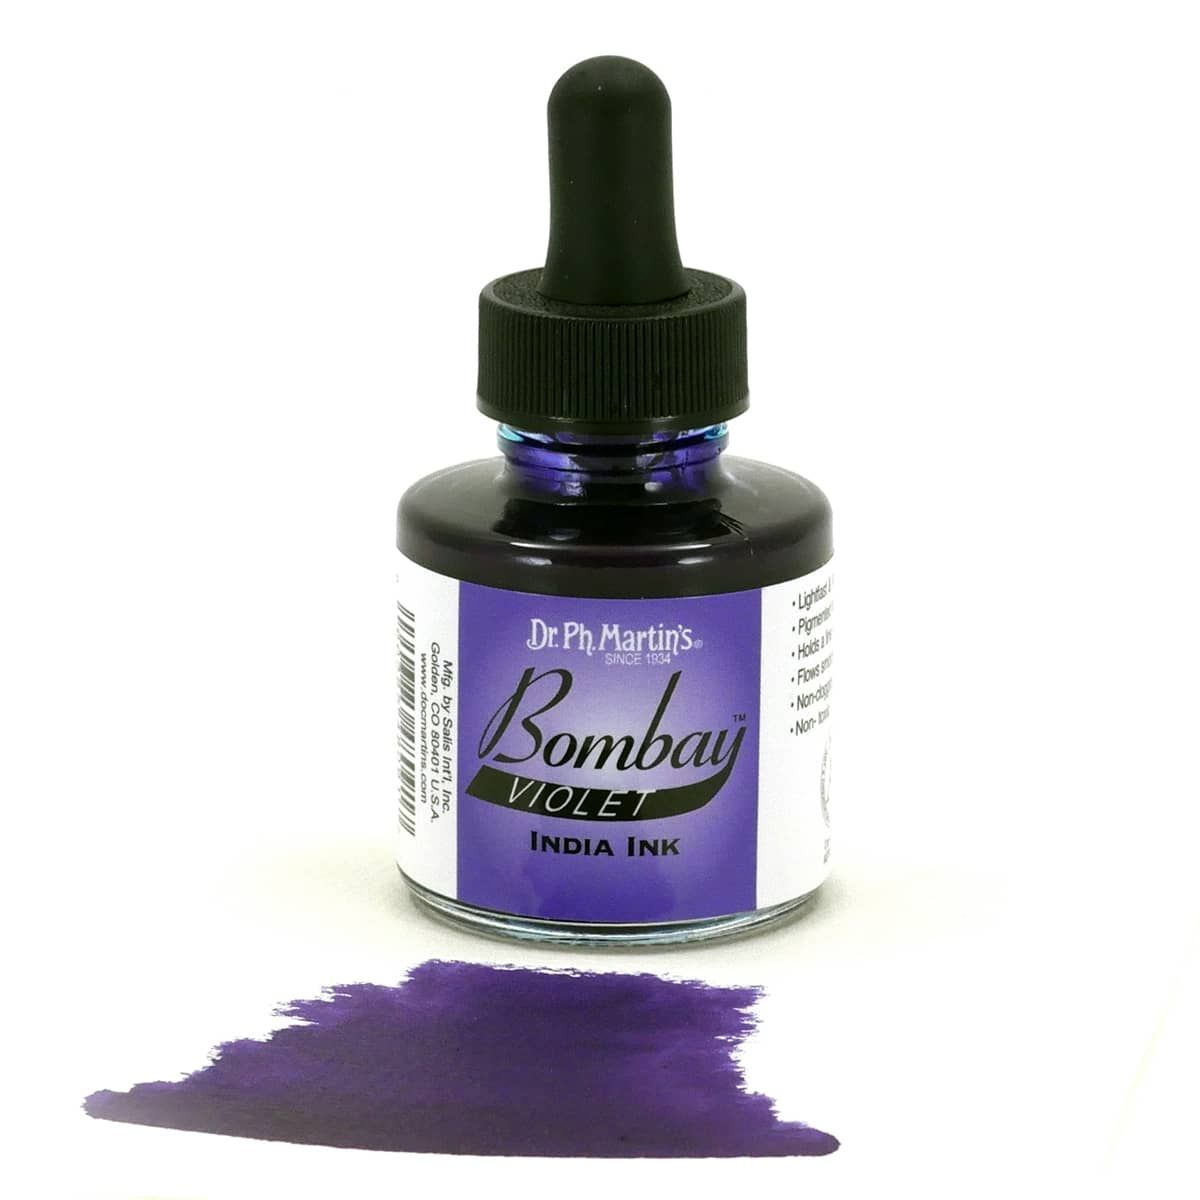 Dr. Ph. Martin's Bombay India Ink-Violet